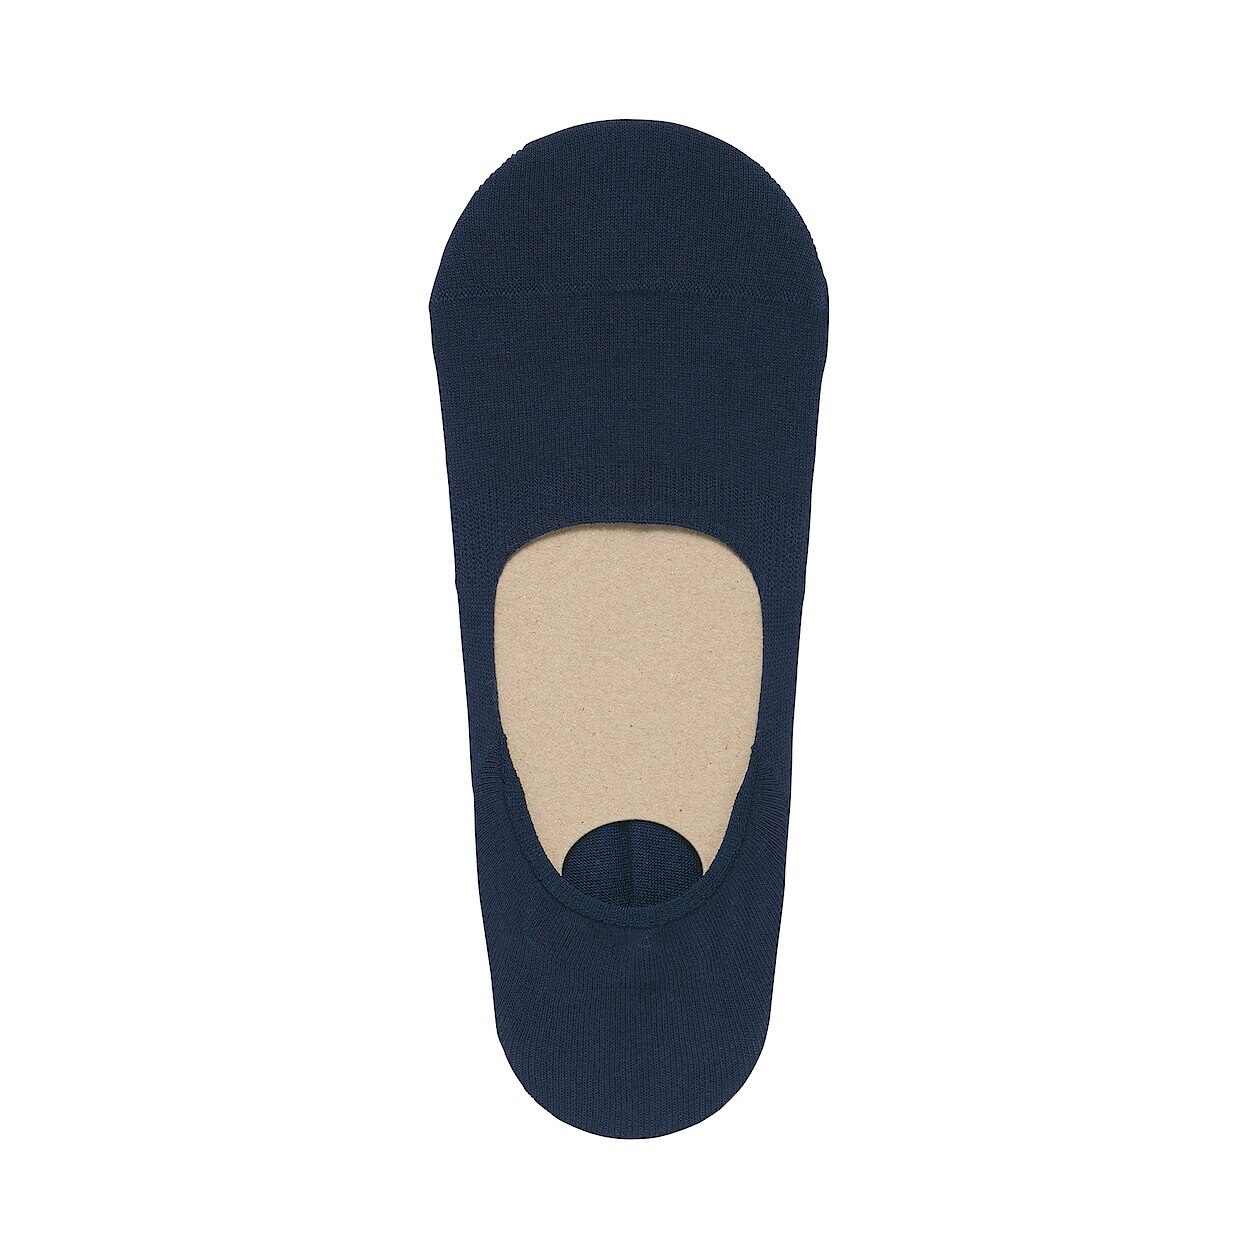 No-Slip Heel Thin Foot Cover